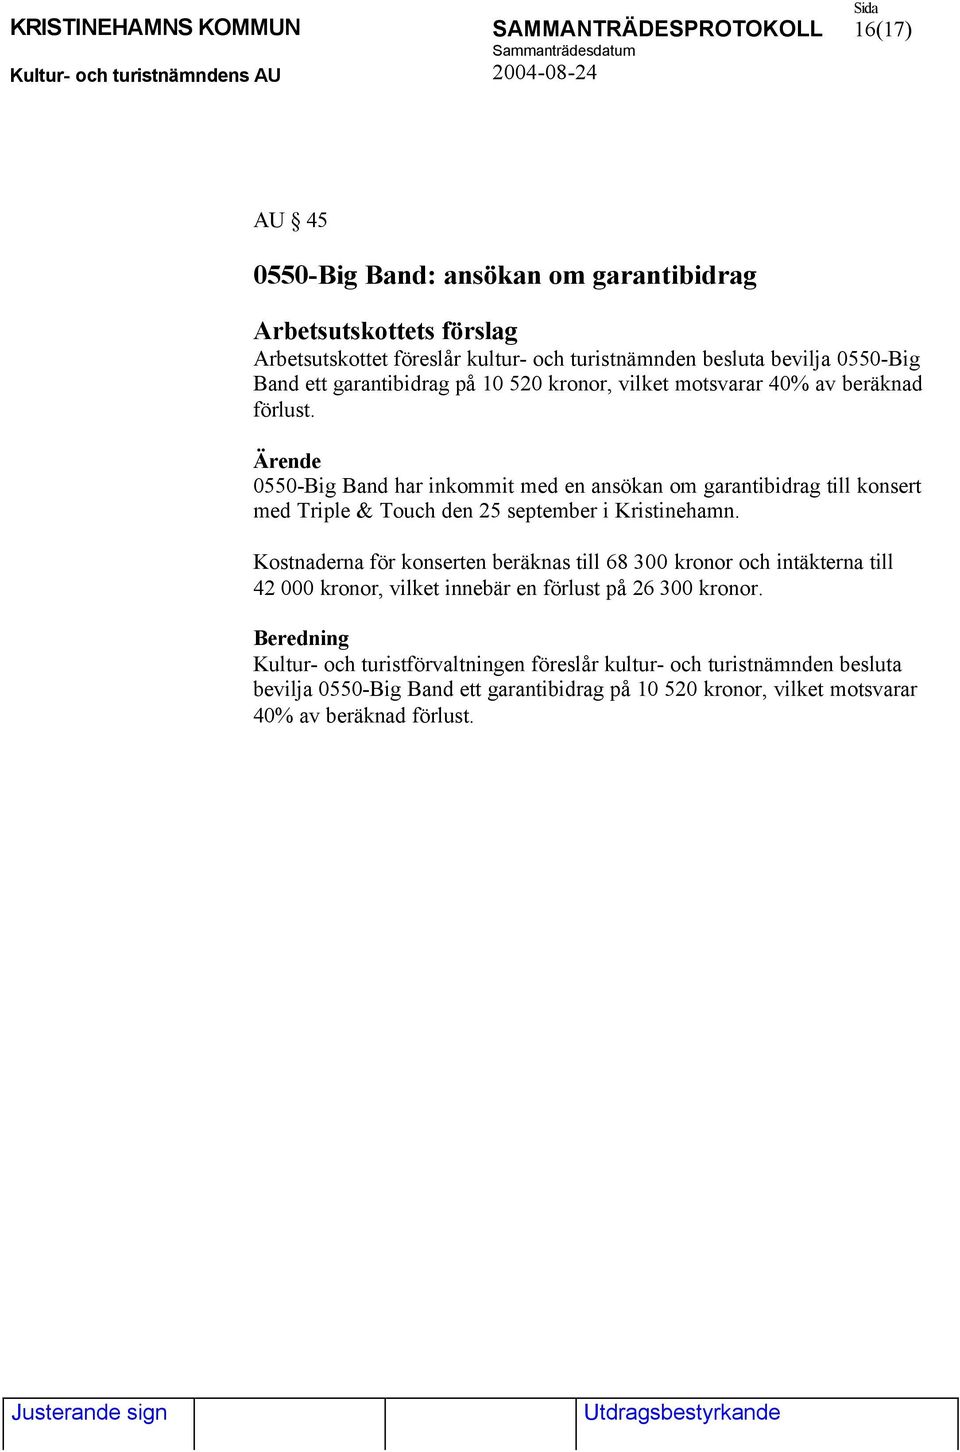 0550-Big Band har inkommit med en ansökan om garantibidrag till konsert med Triple & Touch den 25 september i Kristinehamn.